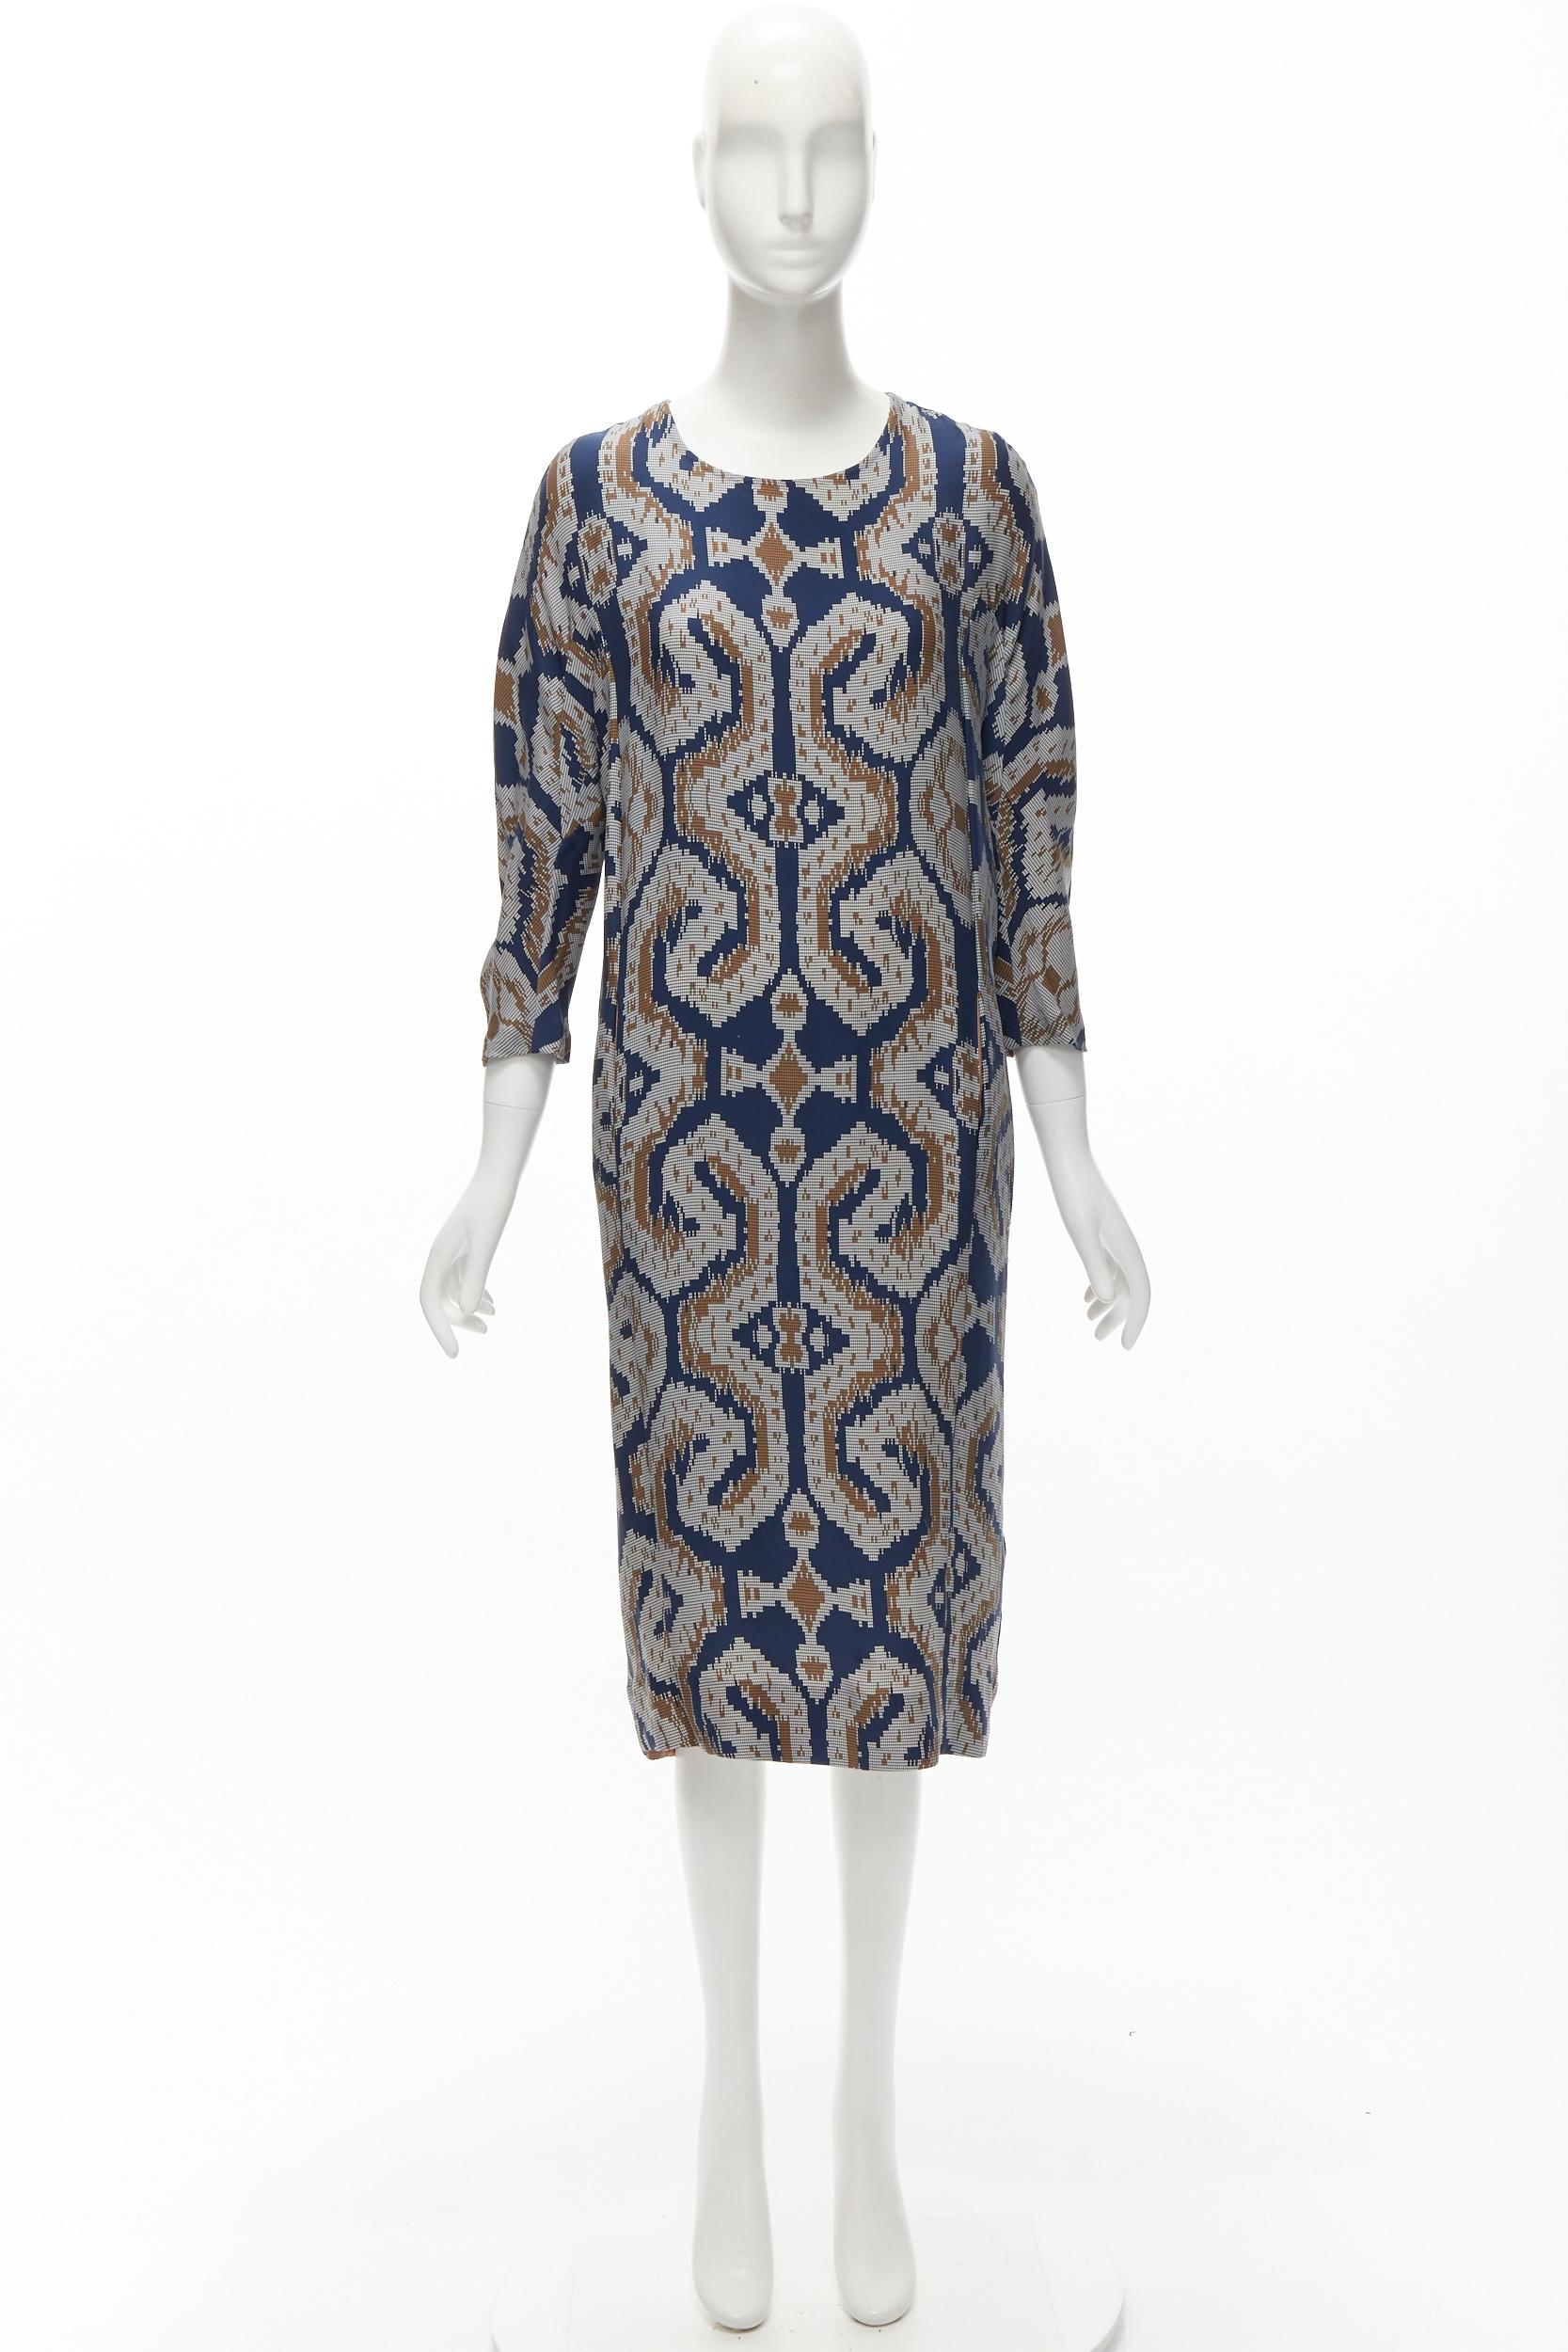 BY MALENE BIRGER blue grey ethnic round crew neck midi dress FR36 S For Sale 4